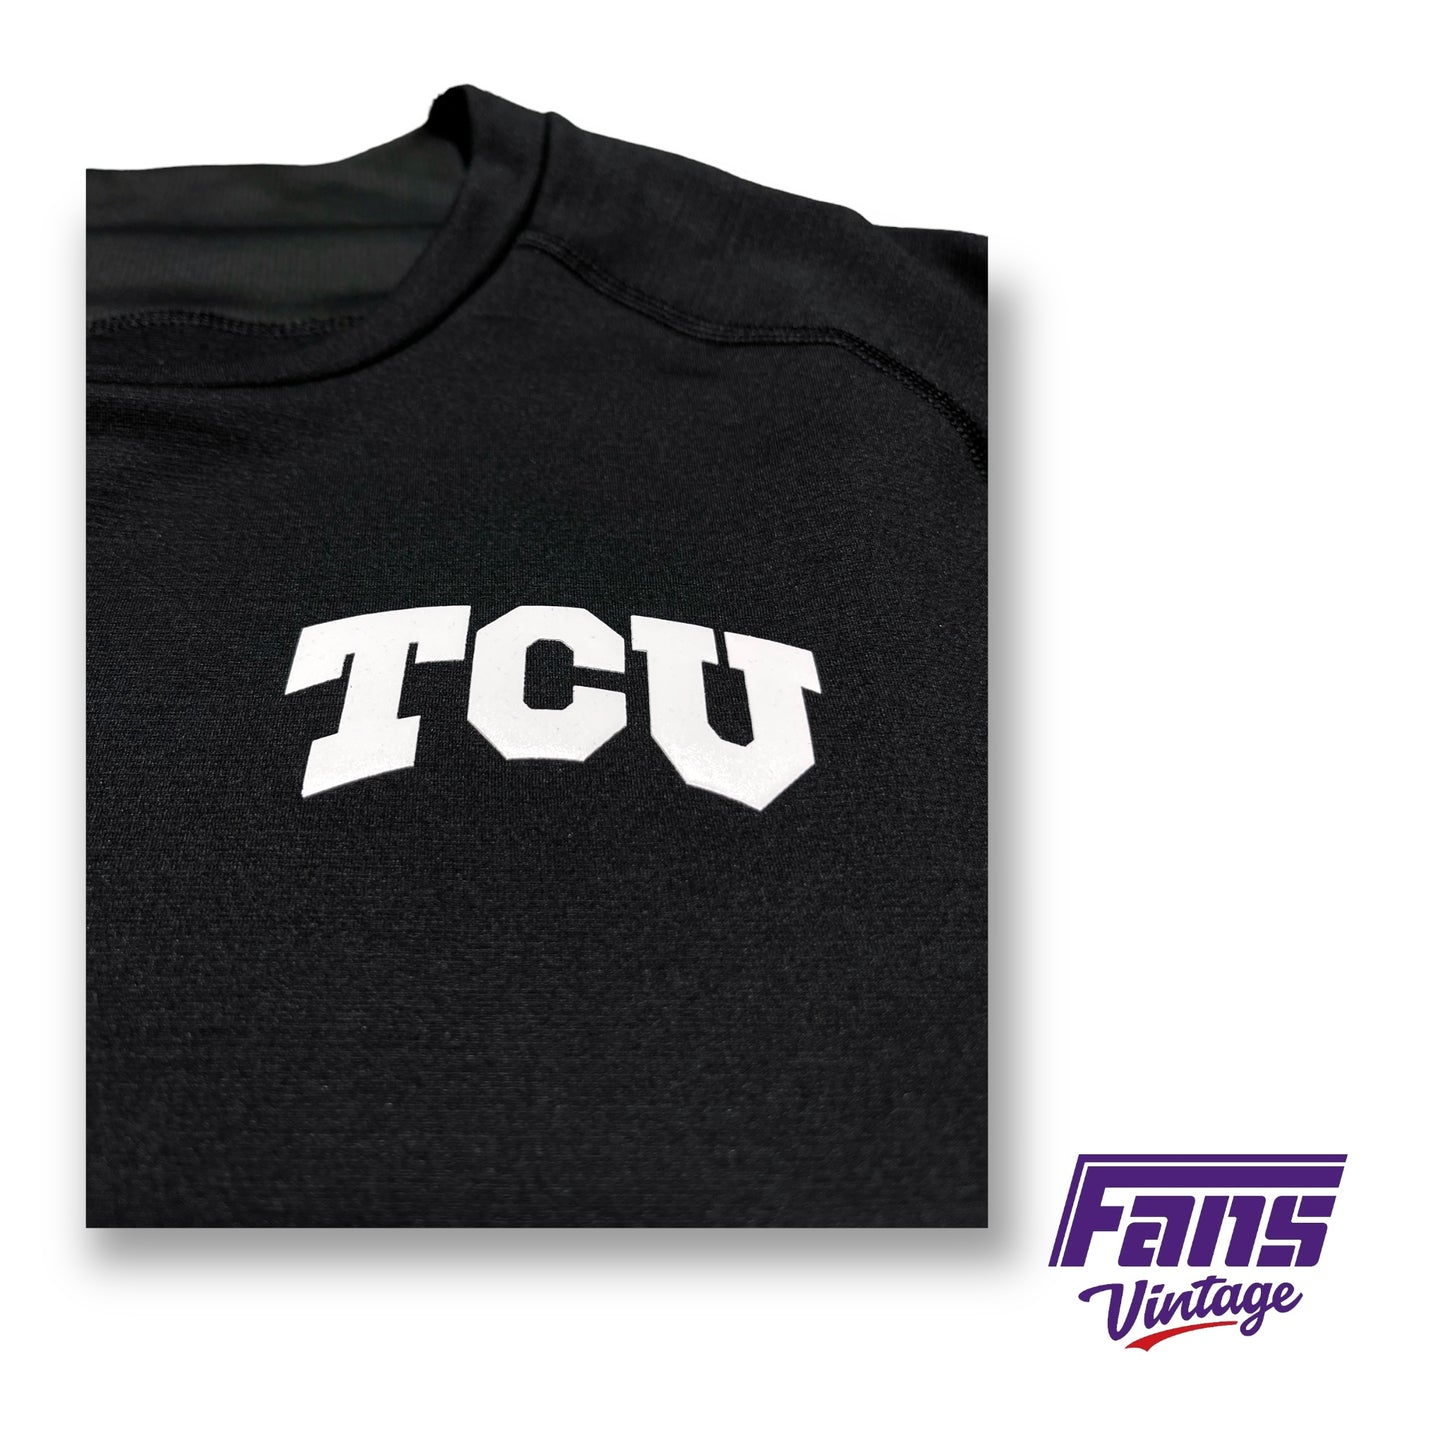 TCU Baseball Team Issued - Player Worn Blackout Nike Training Thermal Top